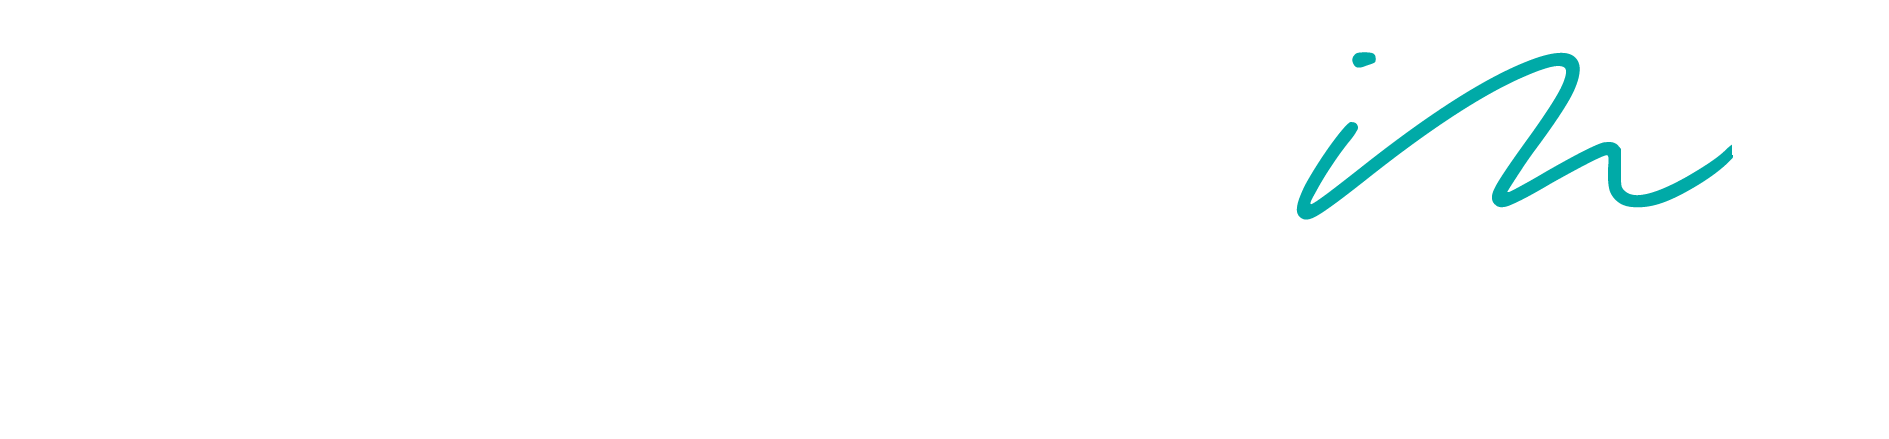 Cristalina Editorial logo